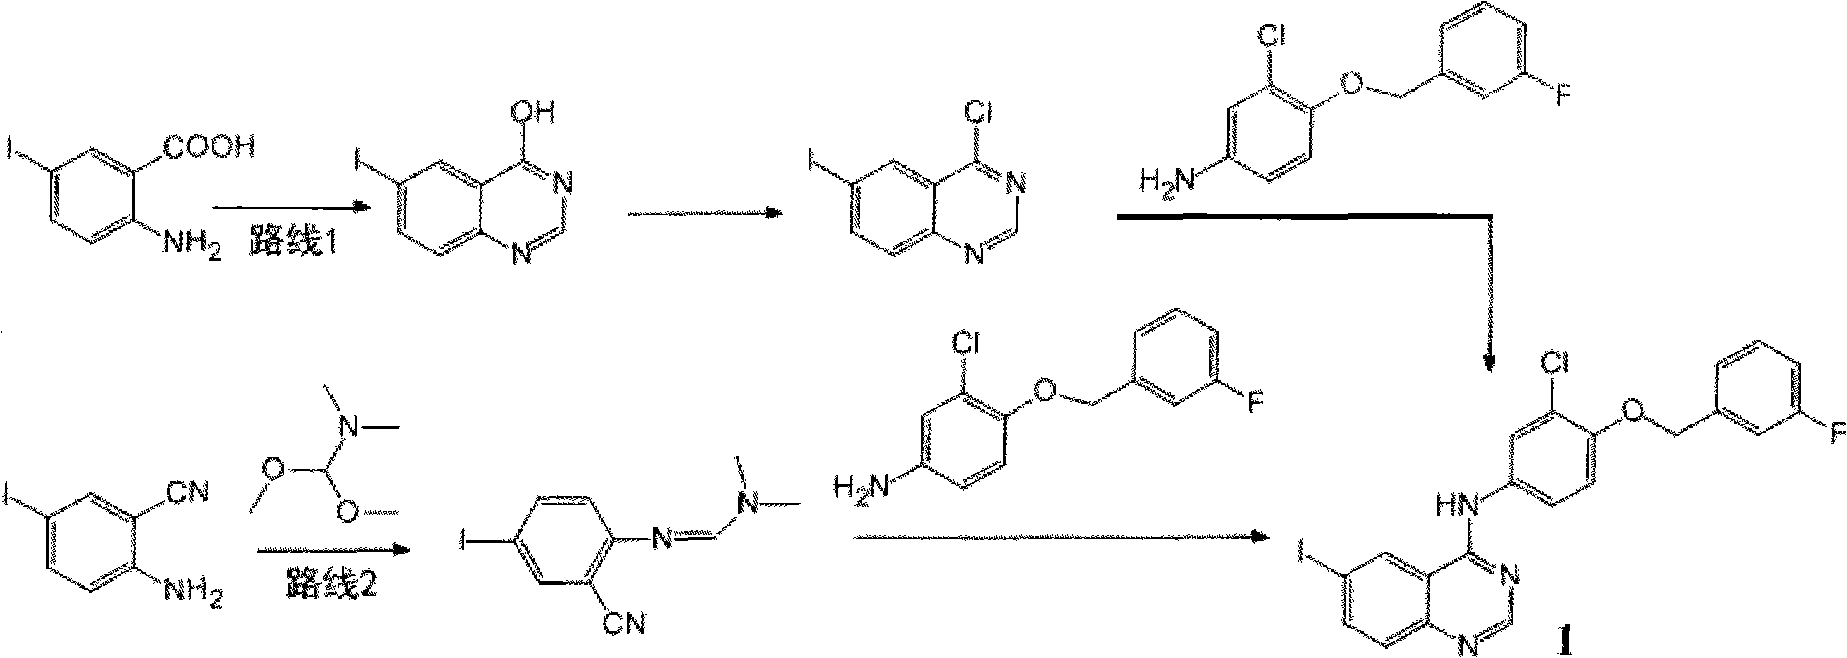 Process for preparing lapatinib synthetic intermediate